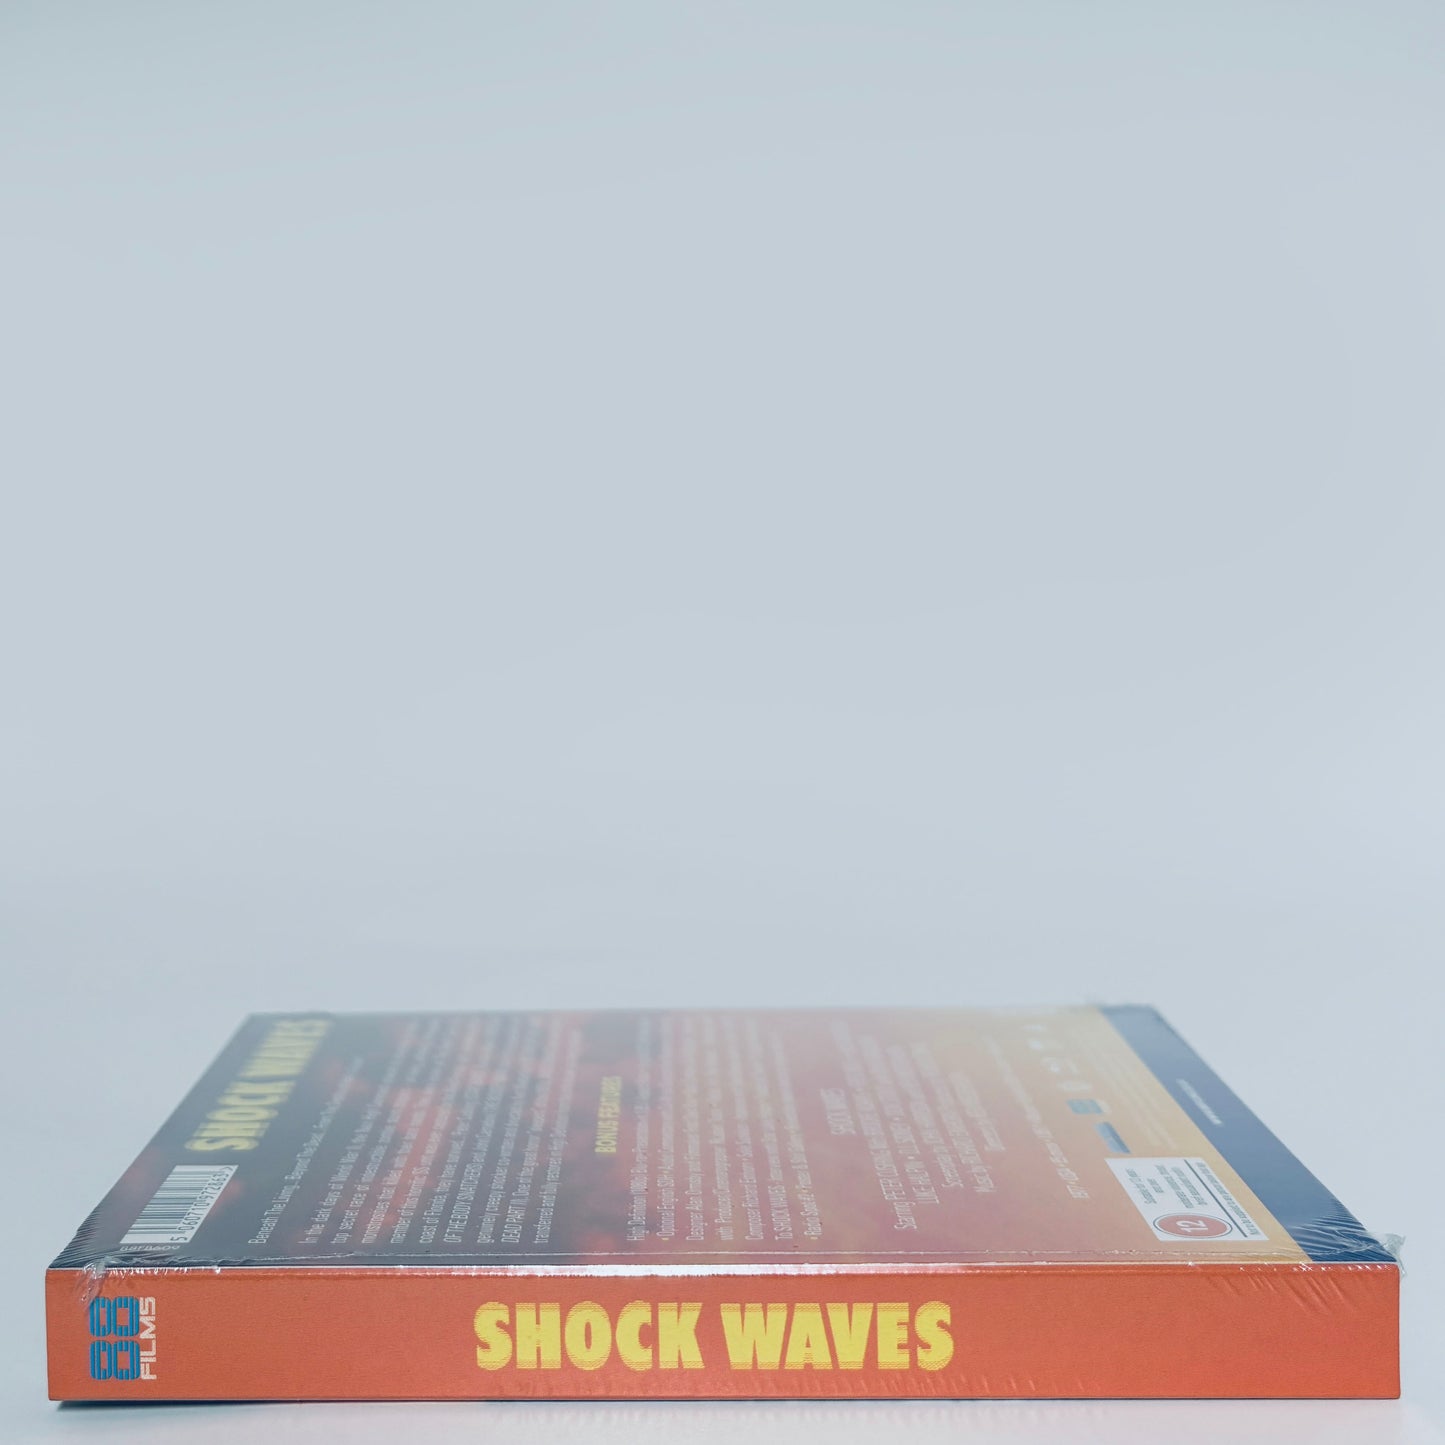 Shock Waves Blu-ray 1977 Peter Cushing ShockWaves Limited Edition 88 Films